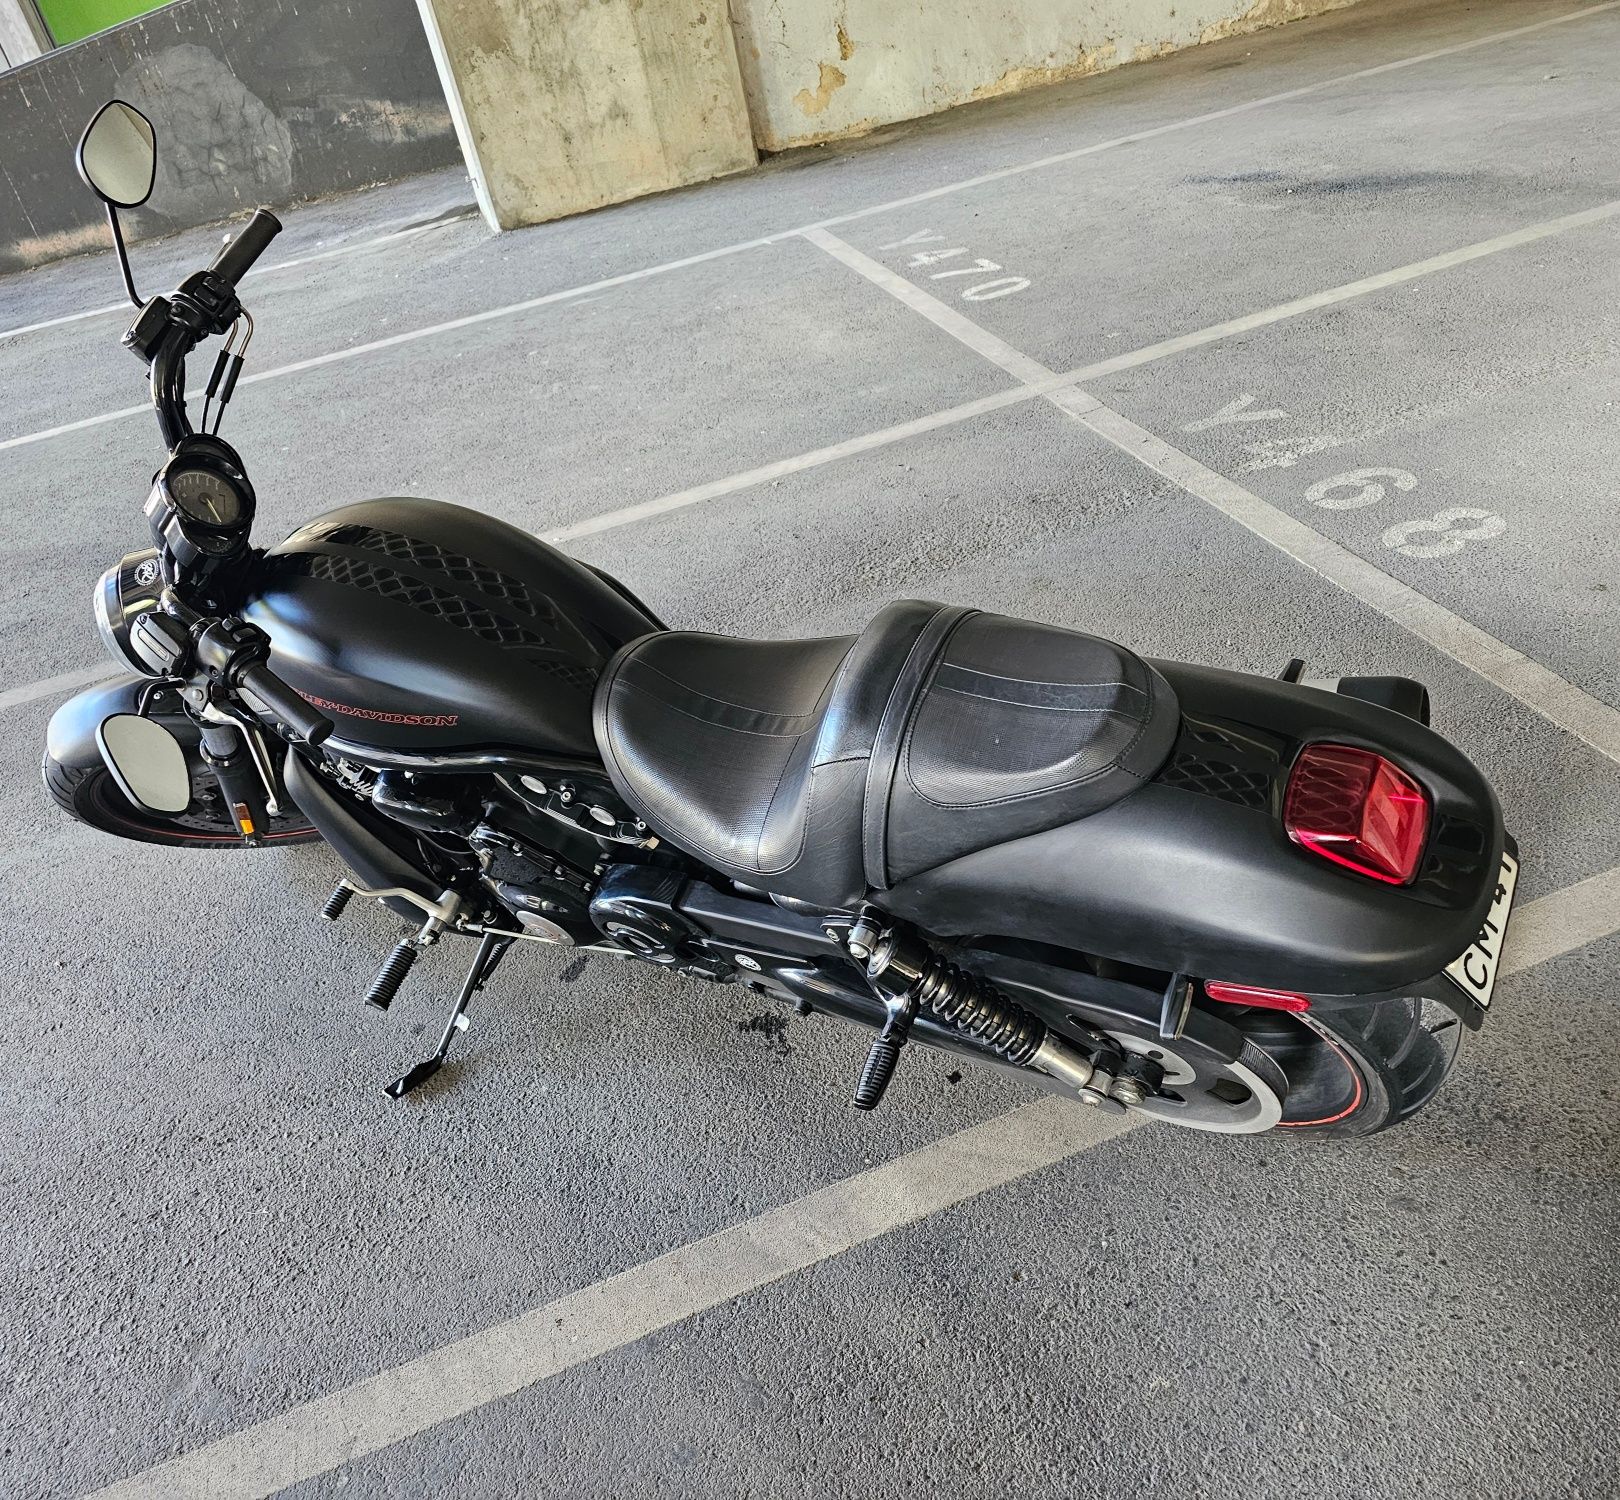 Harley Davidson Nigth Rod Special